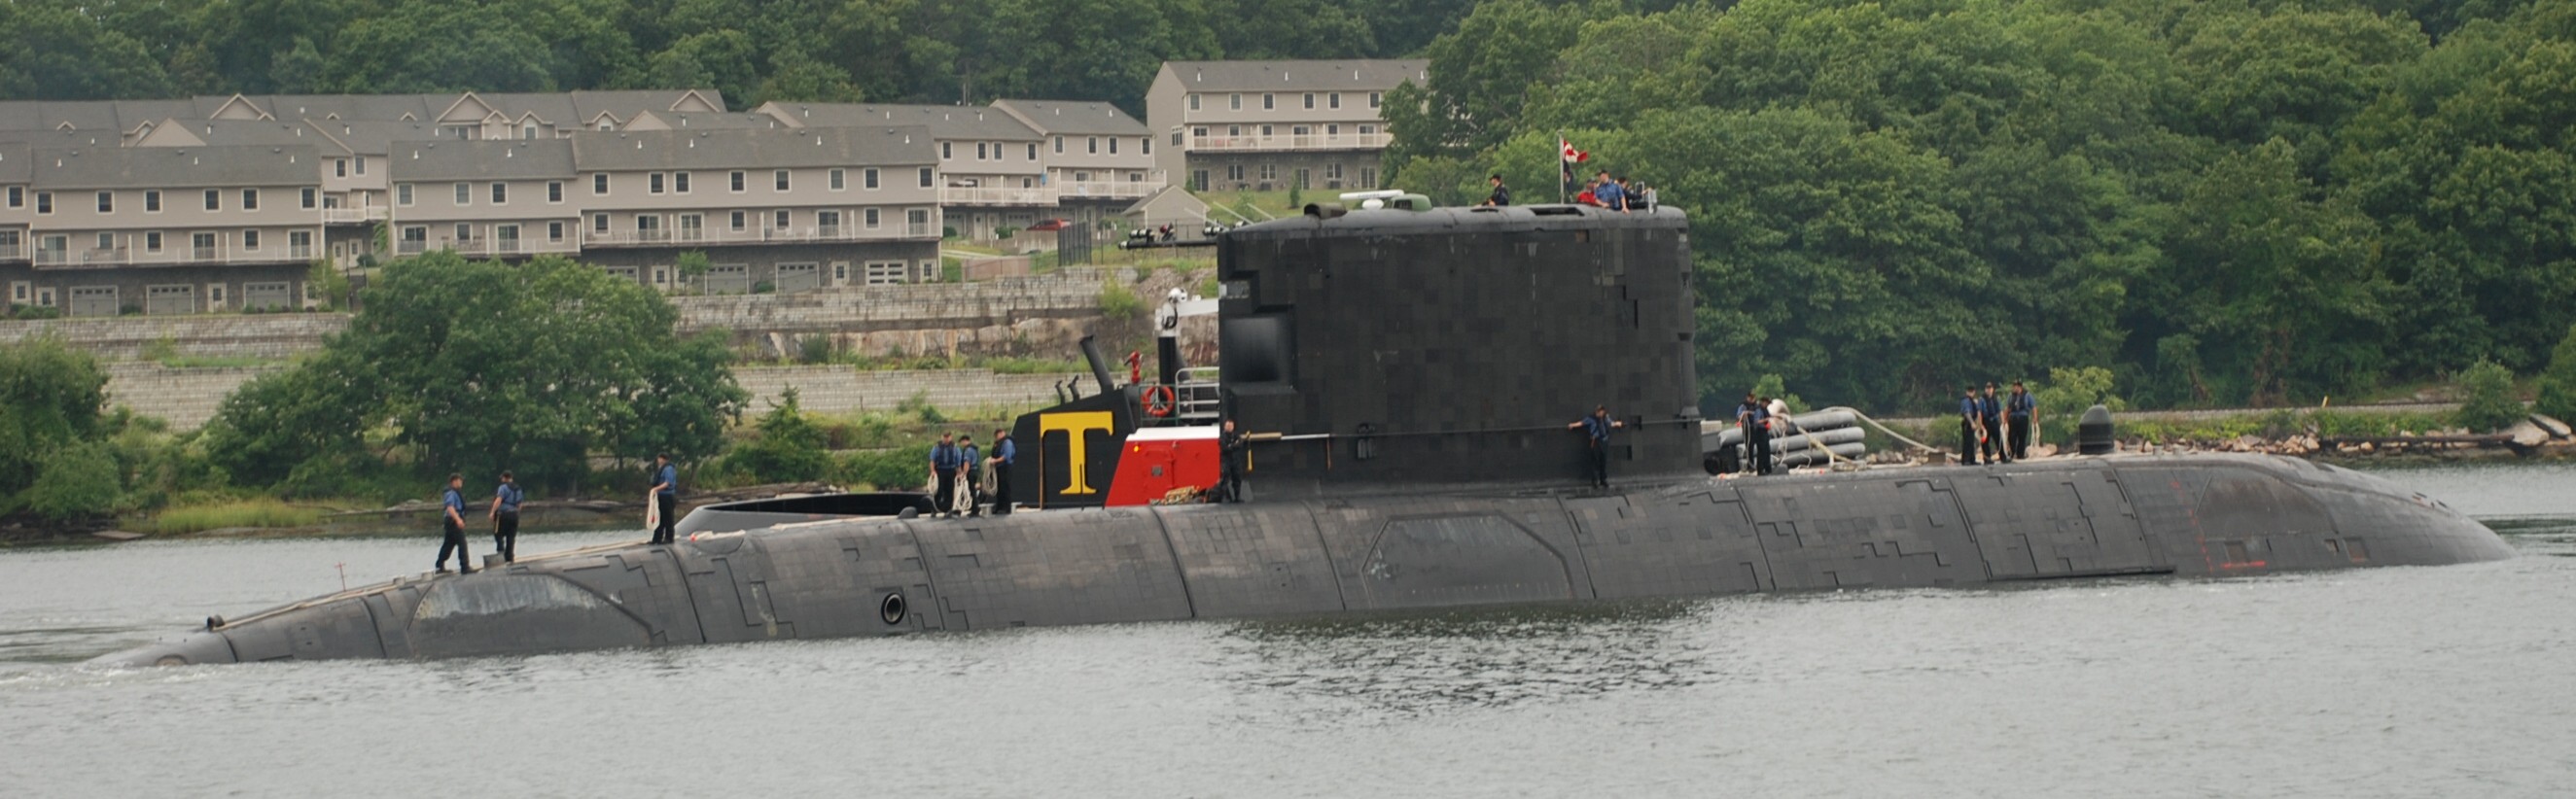 ssk-878 hmcs corner brook victoria upholder class patrol submarine ncsm royal canadian navy 03